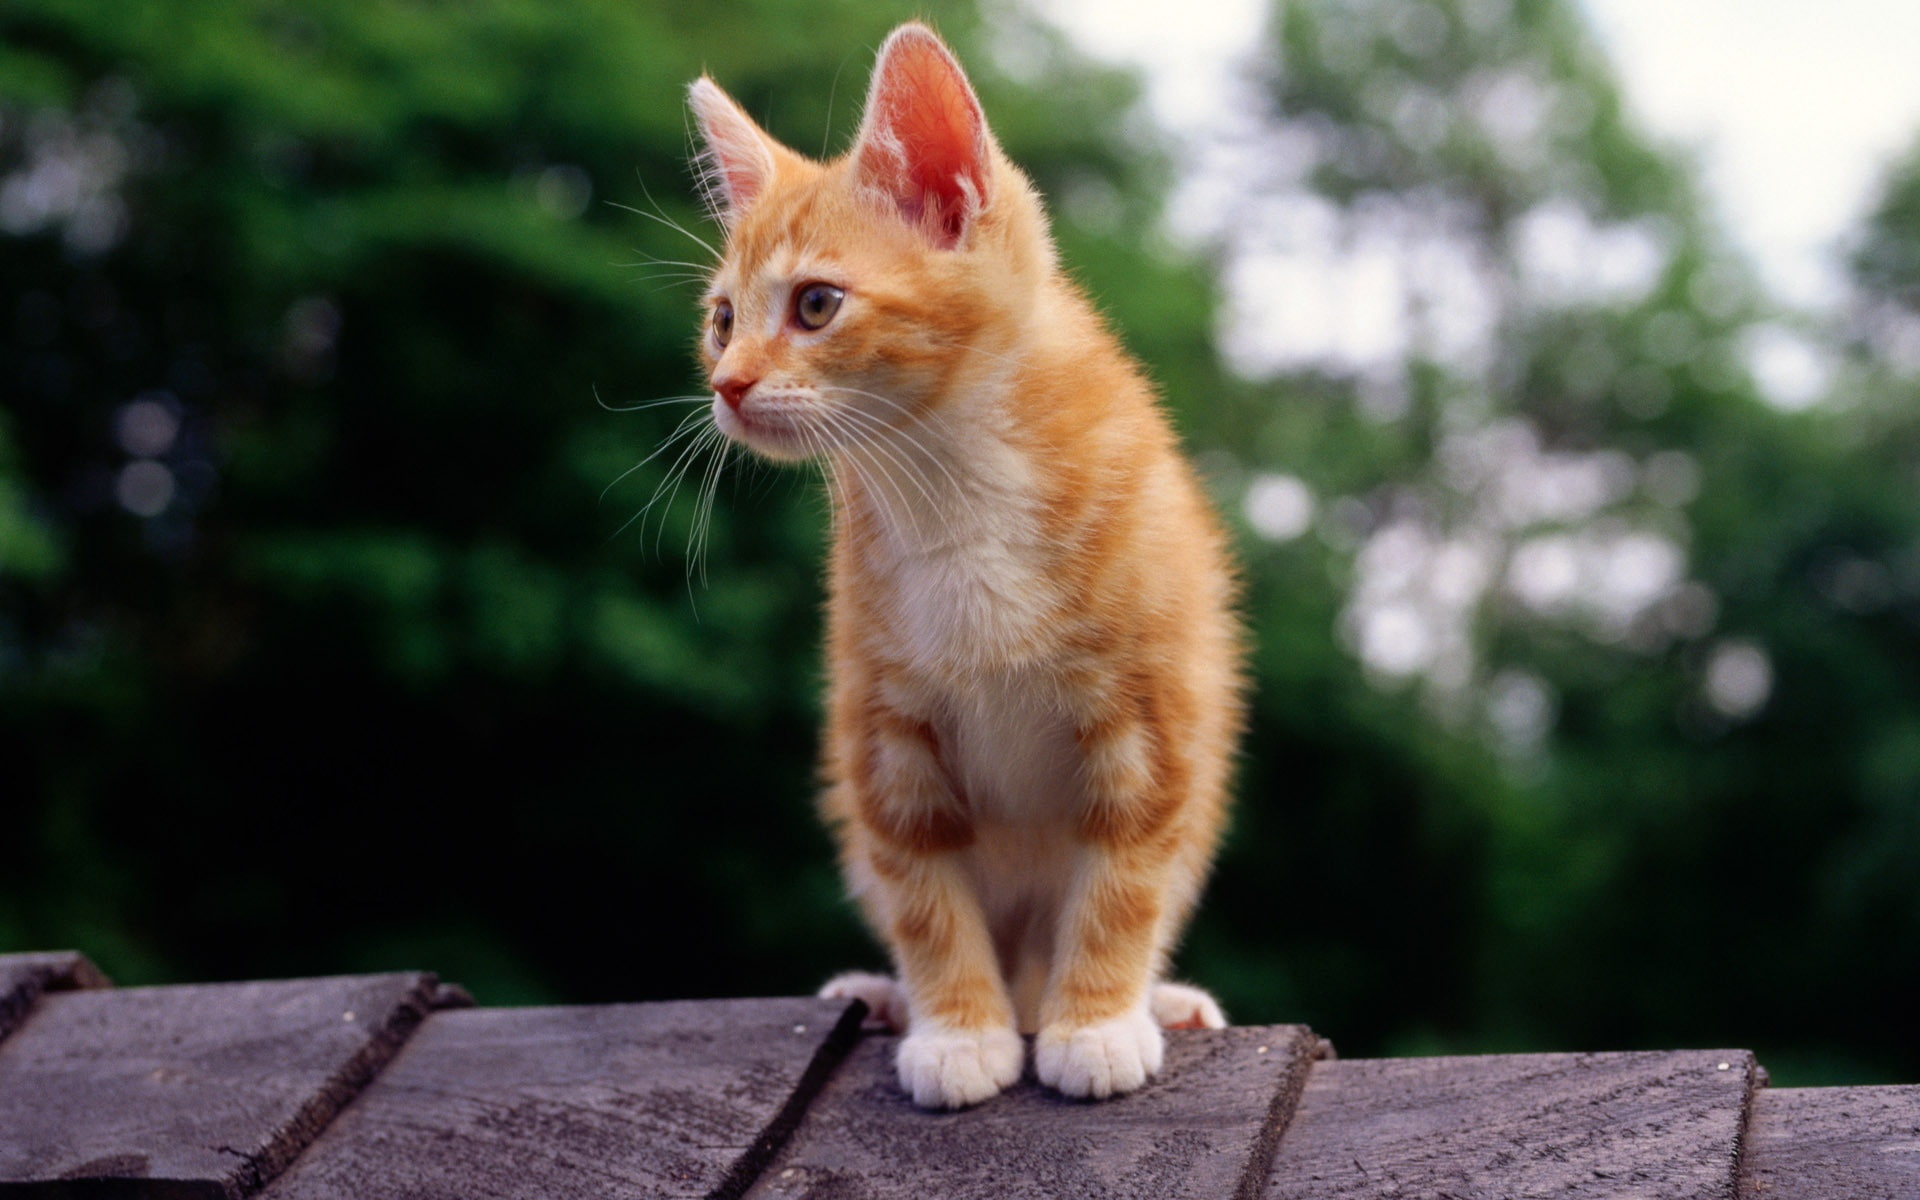 Kitten at roof, orange tabby kitten